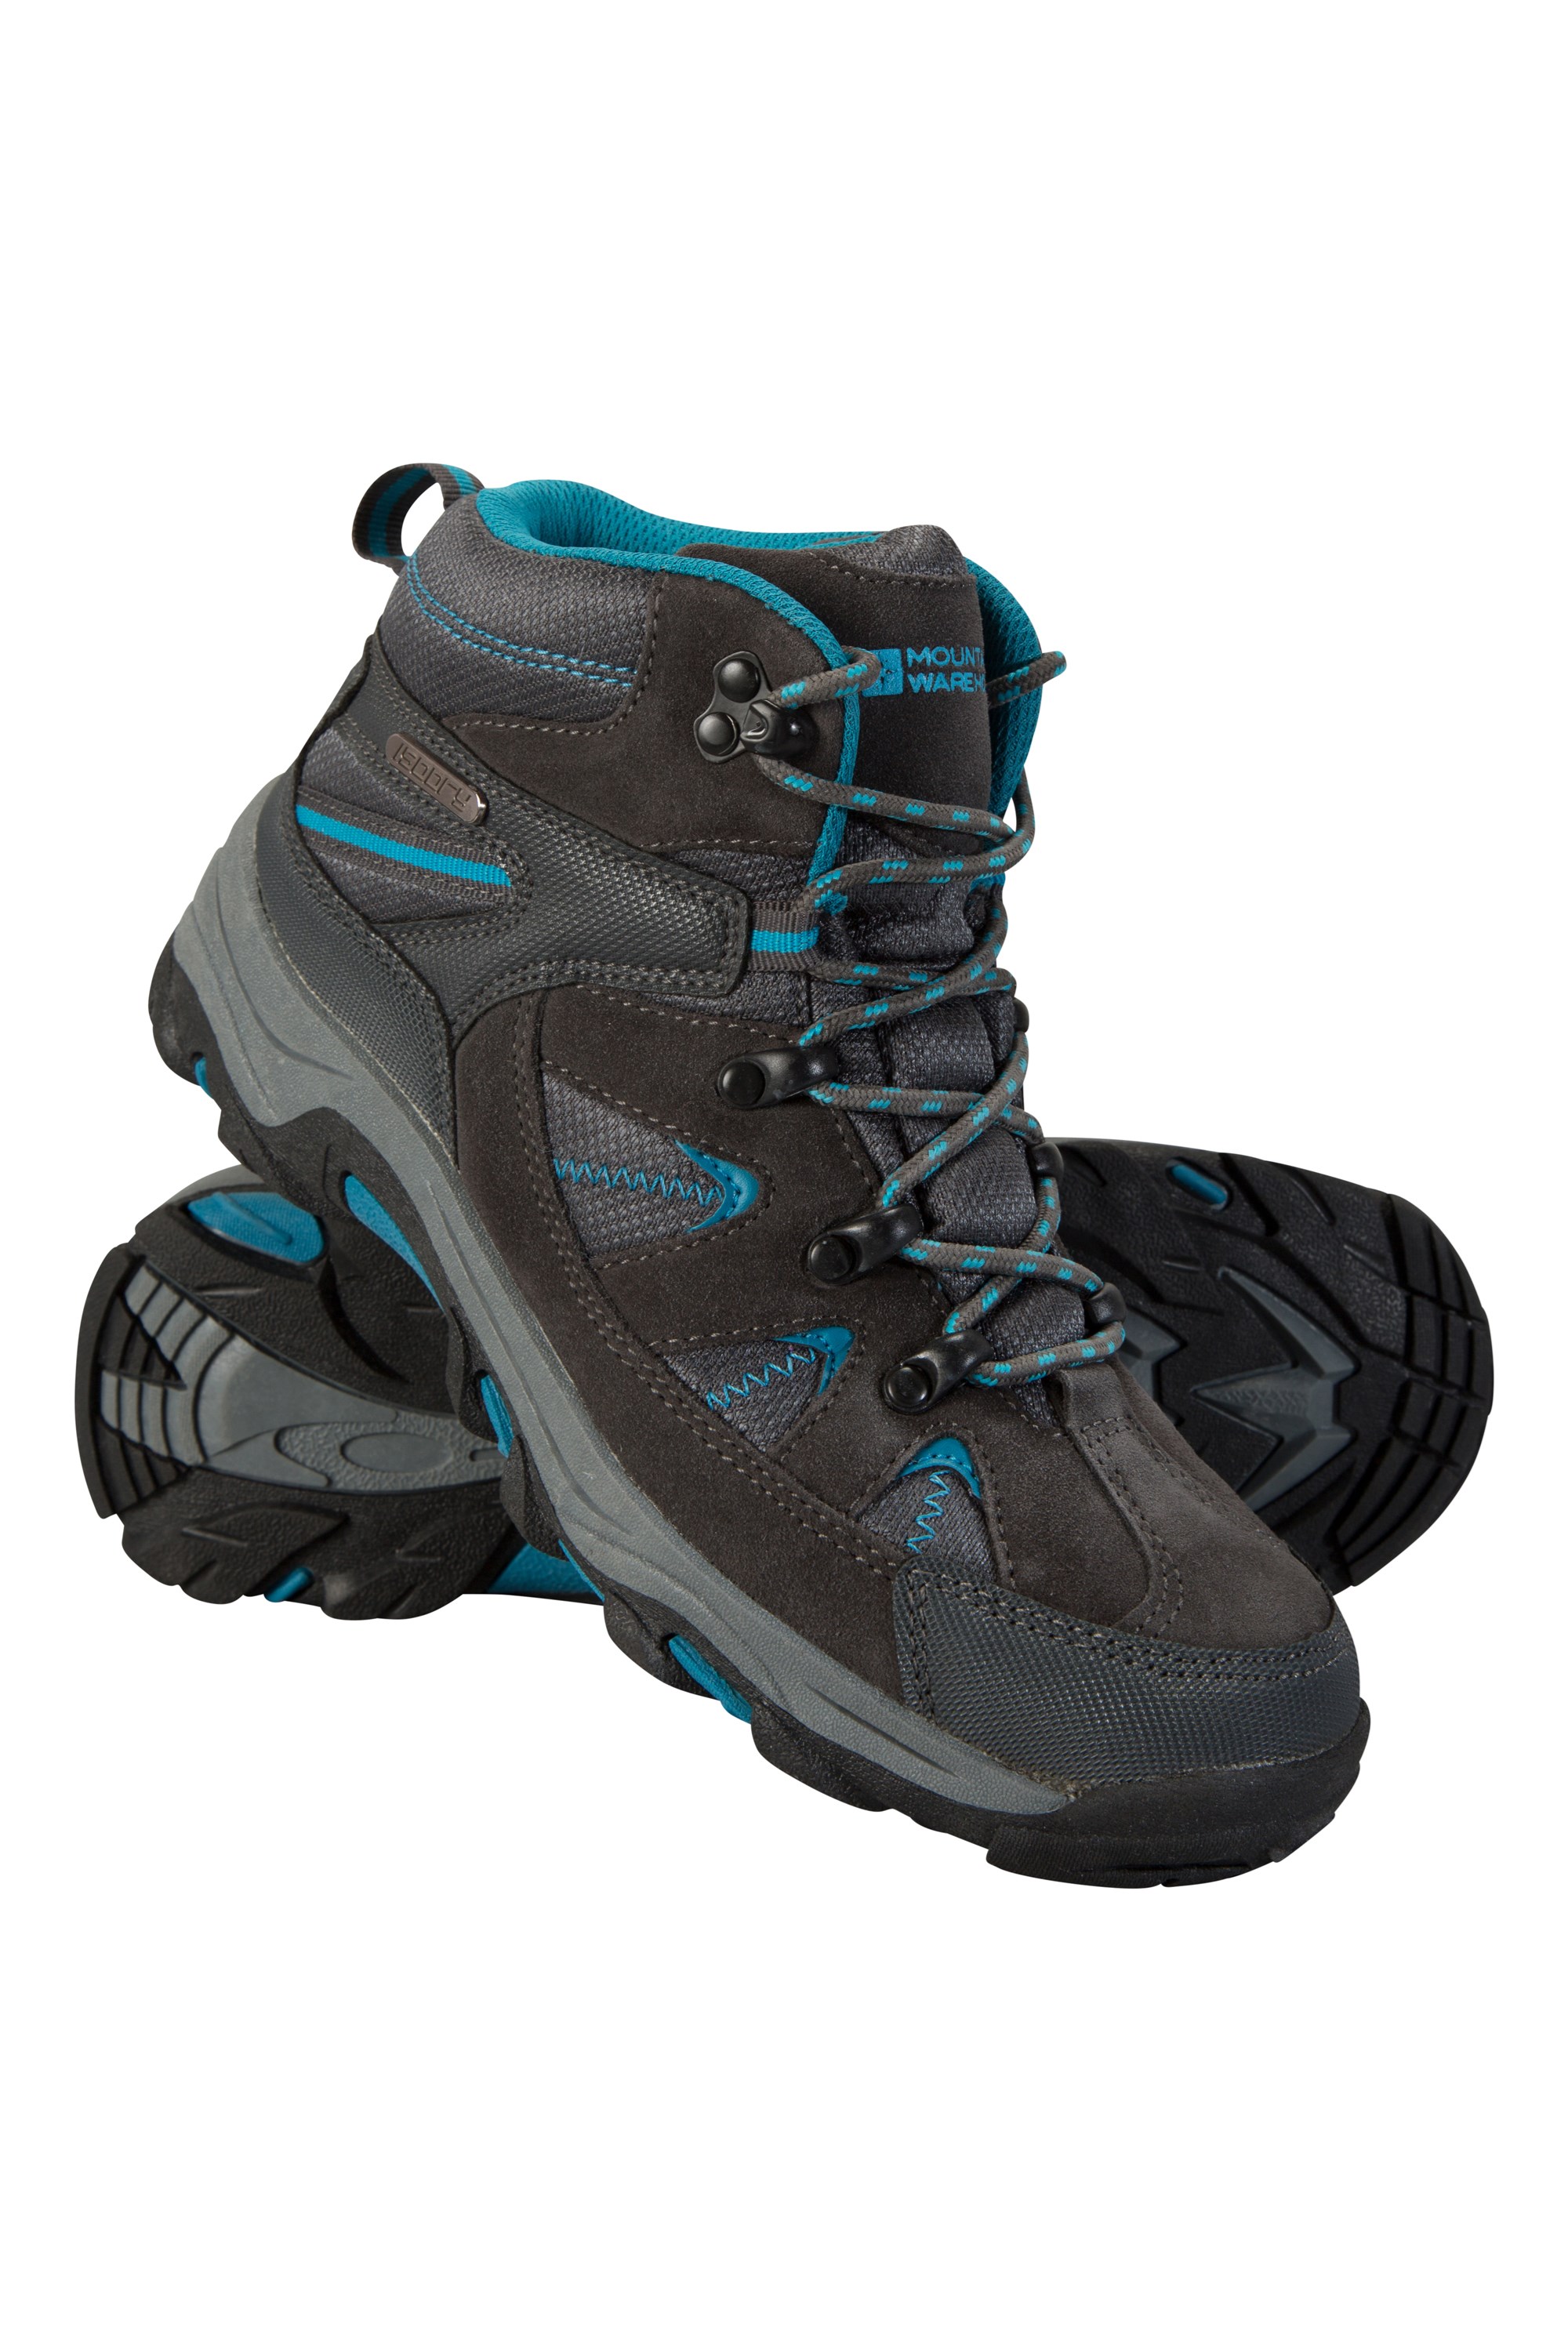 mountain warehouse hiking shoes